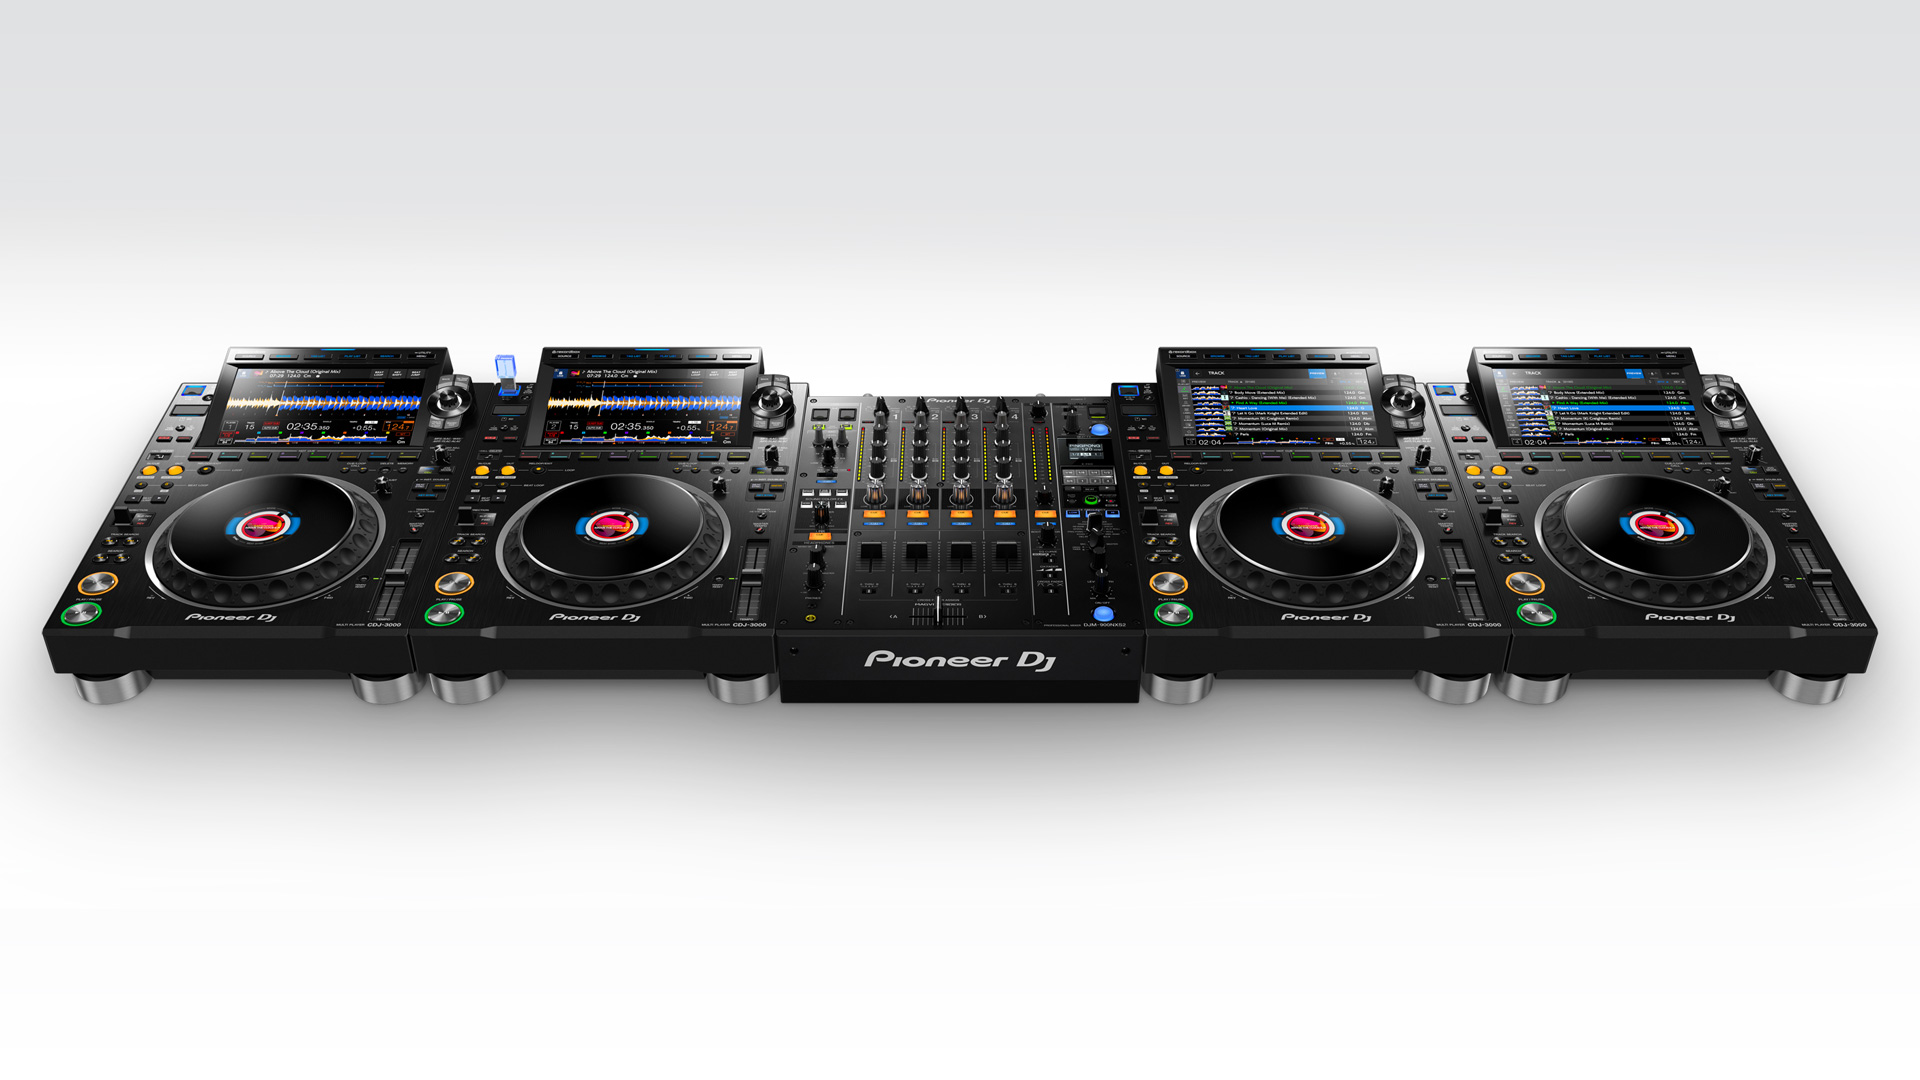 The Pioneer DJ CDJ-3000 multi player and Pioneer DJM-900NXS2 digital mixer